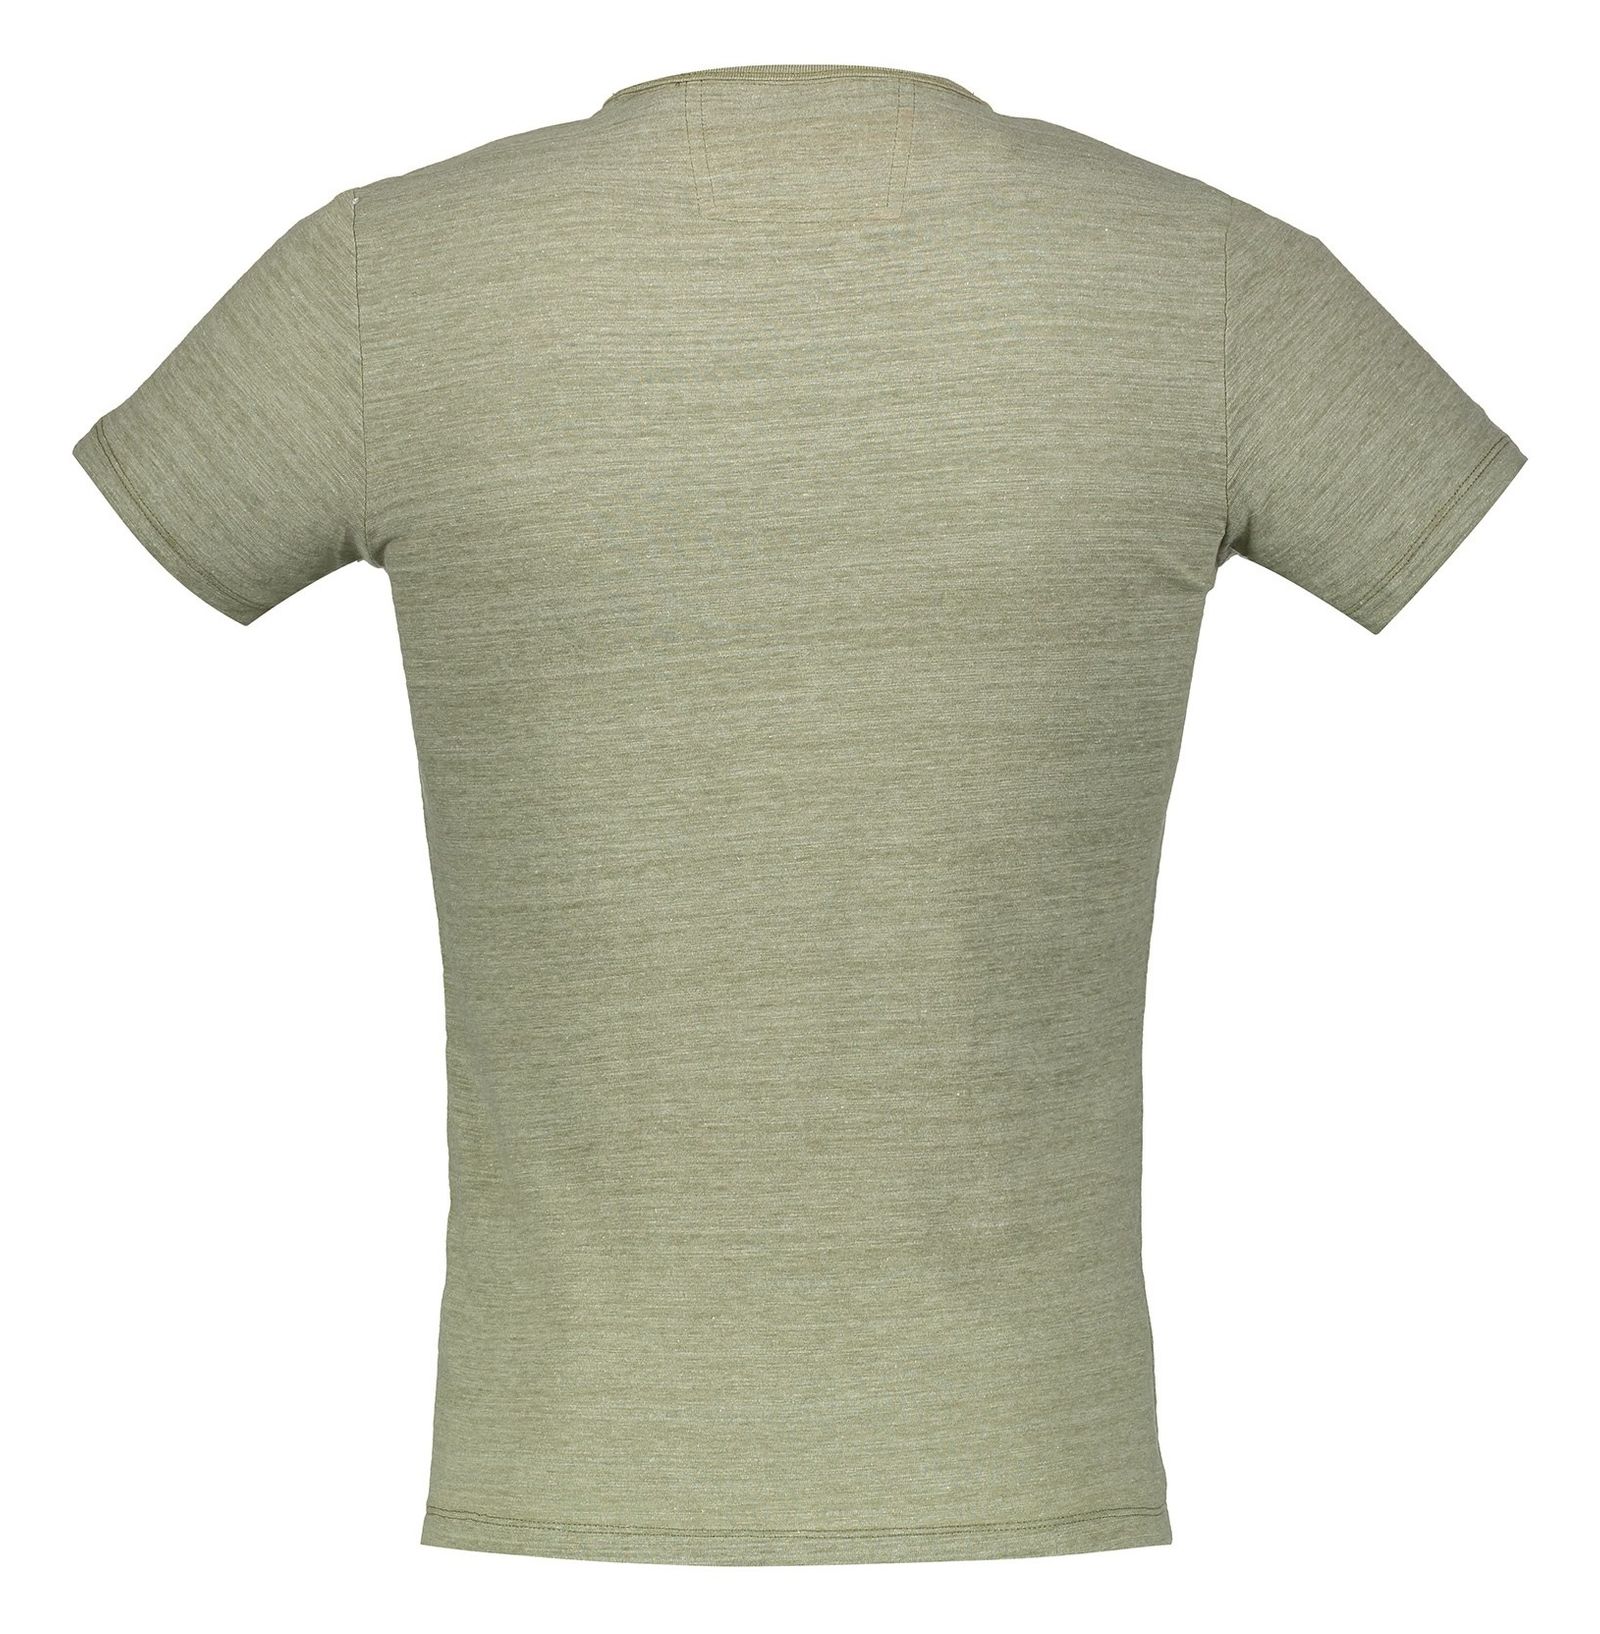 تی شرت نخی یقه گرد مردانه - اس.اولیور - زيتوني - 3